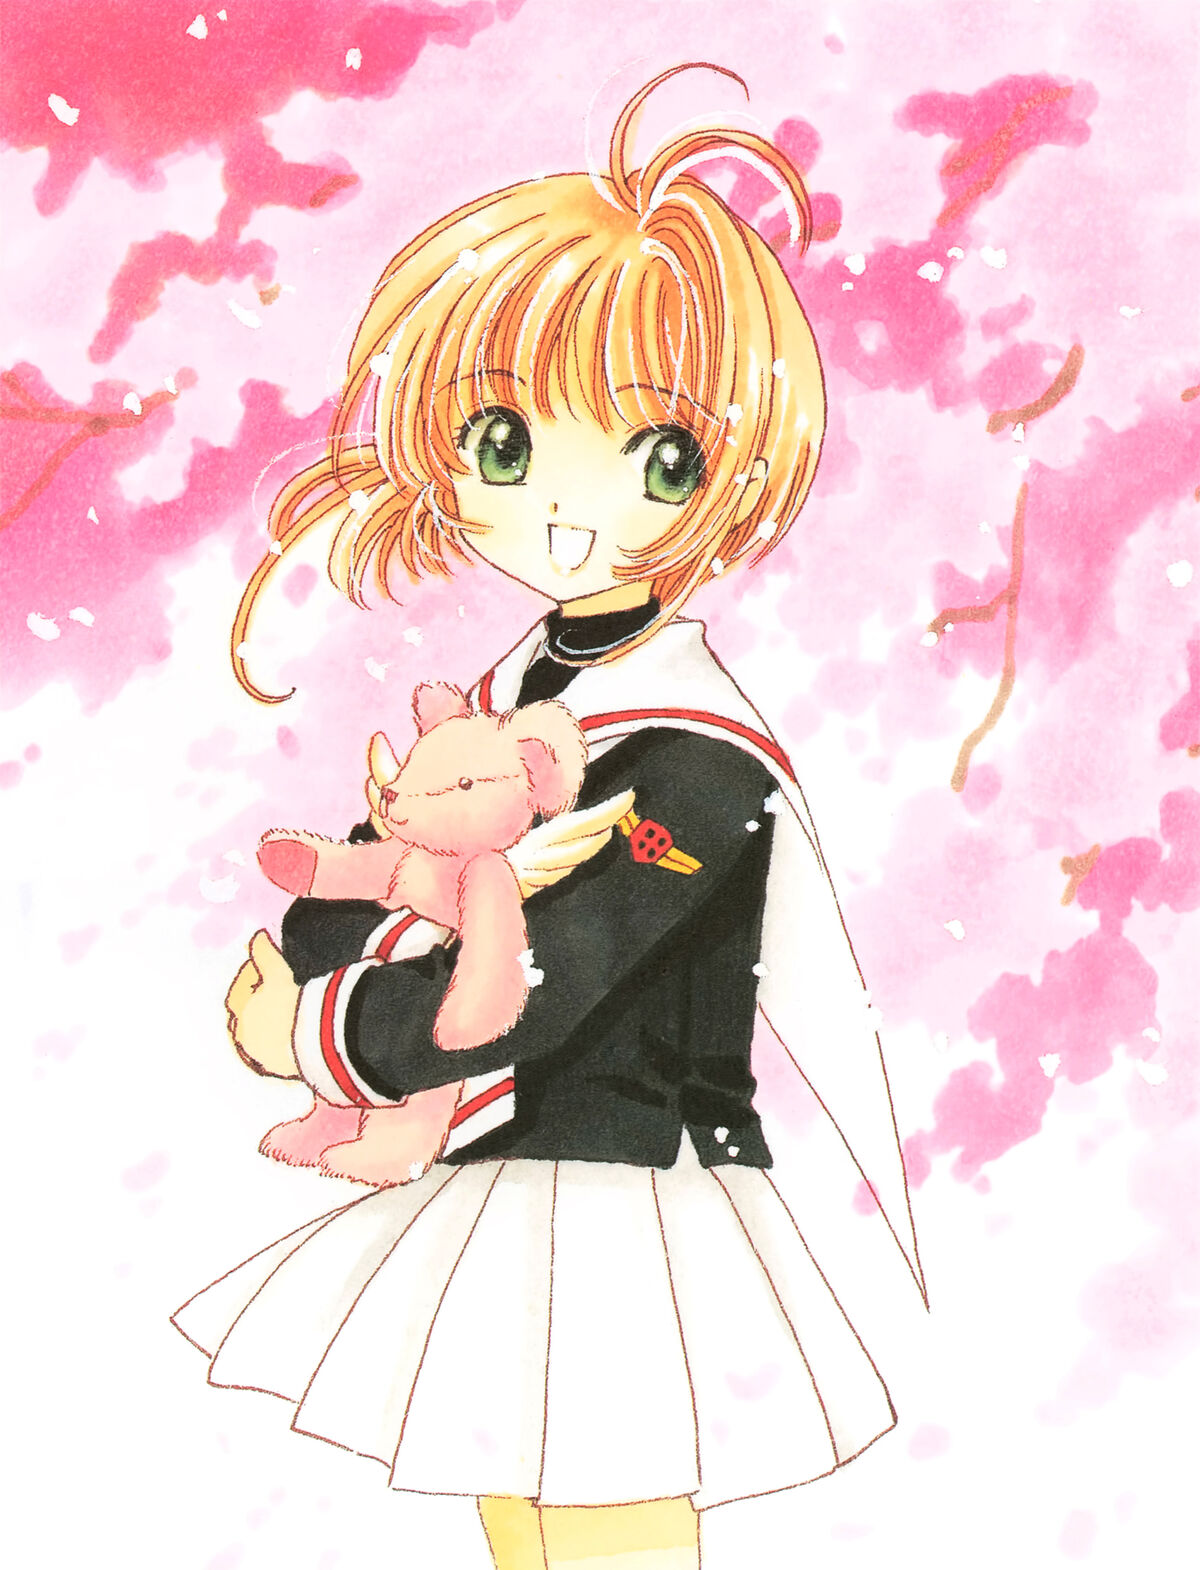 Cardcaptor Sakura 10 Differences Between The Anime And The Manga